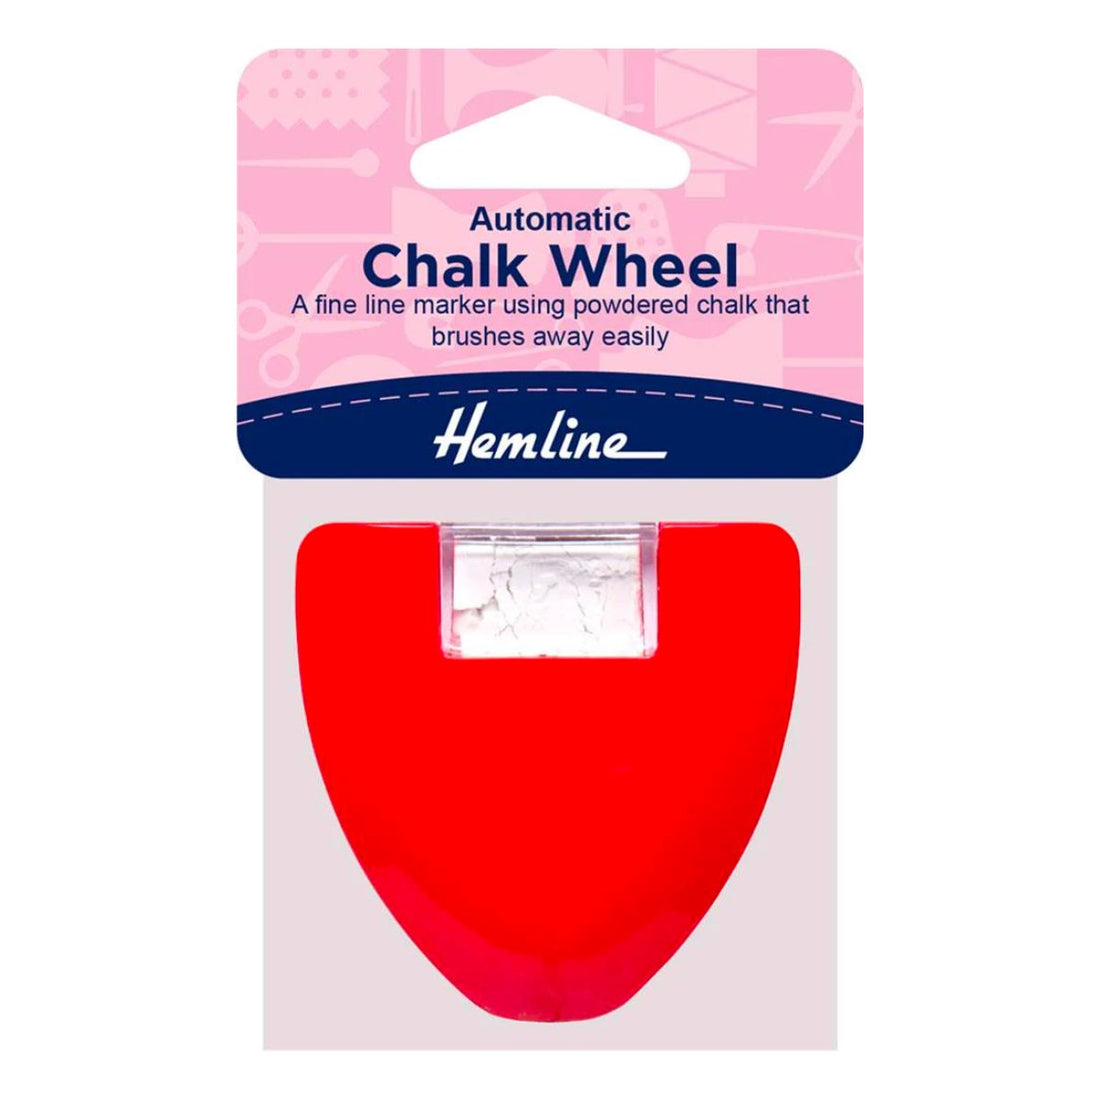 Hemline Automatic Chalk Wheel For Pattern Marking, Tailoring